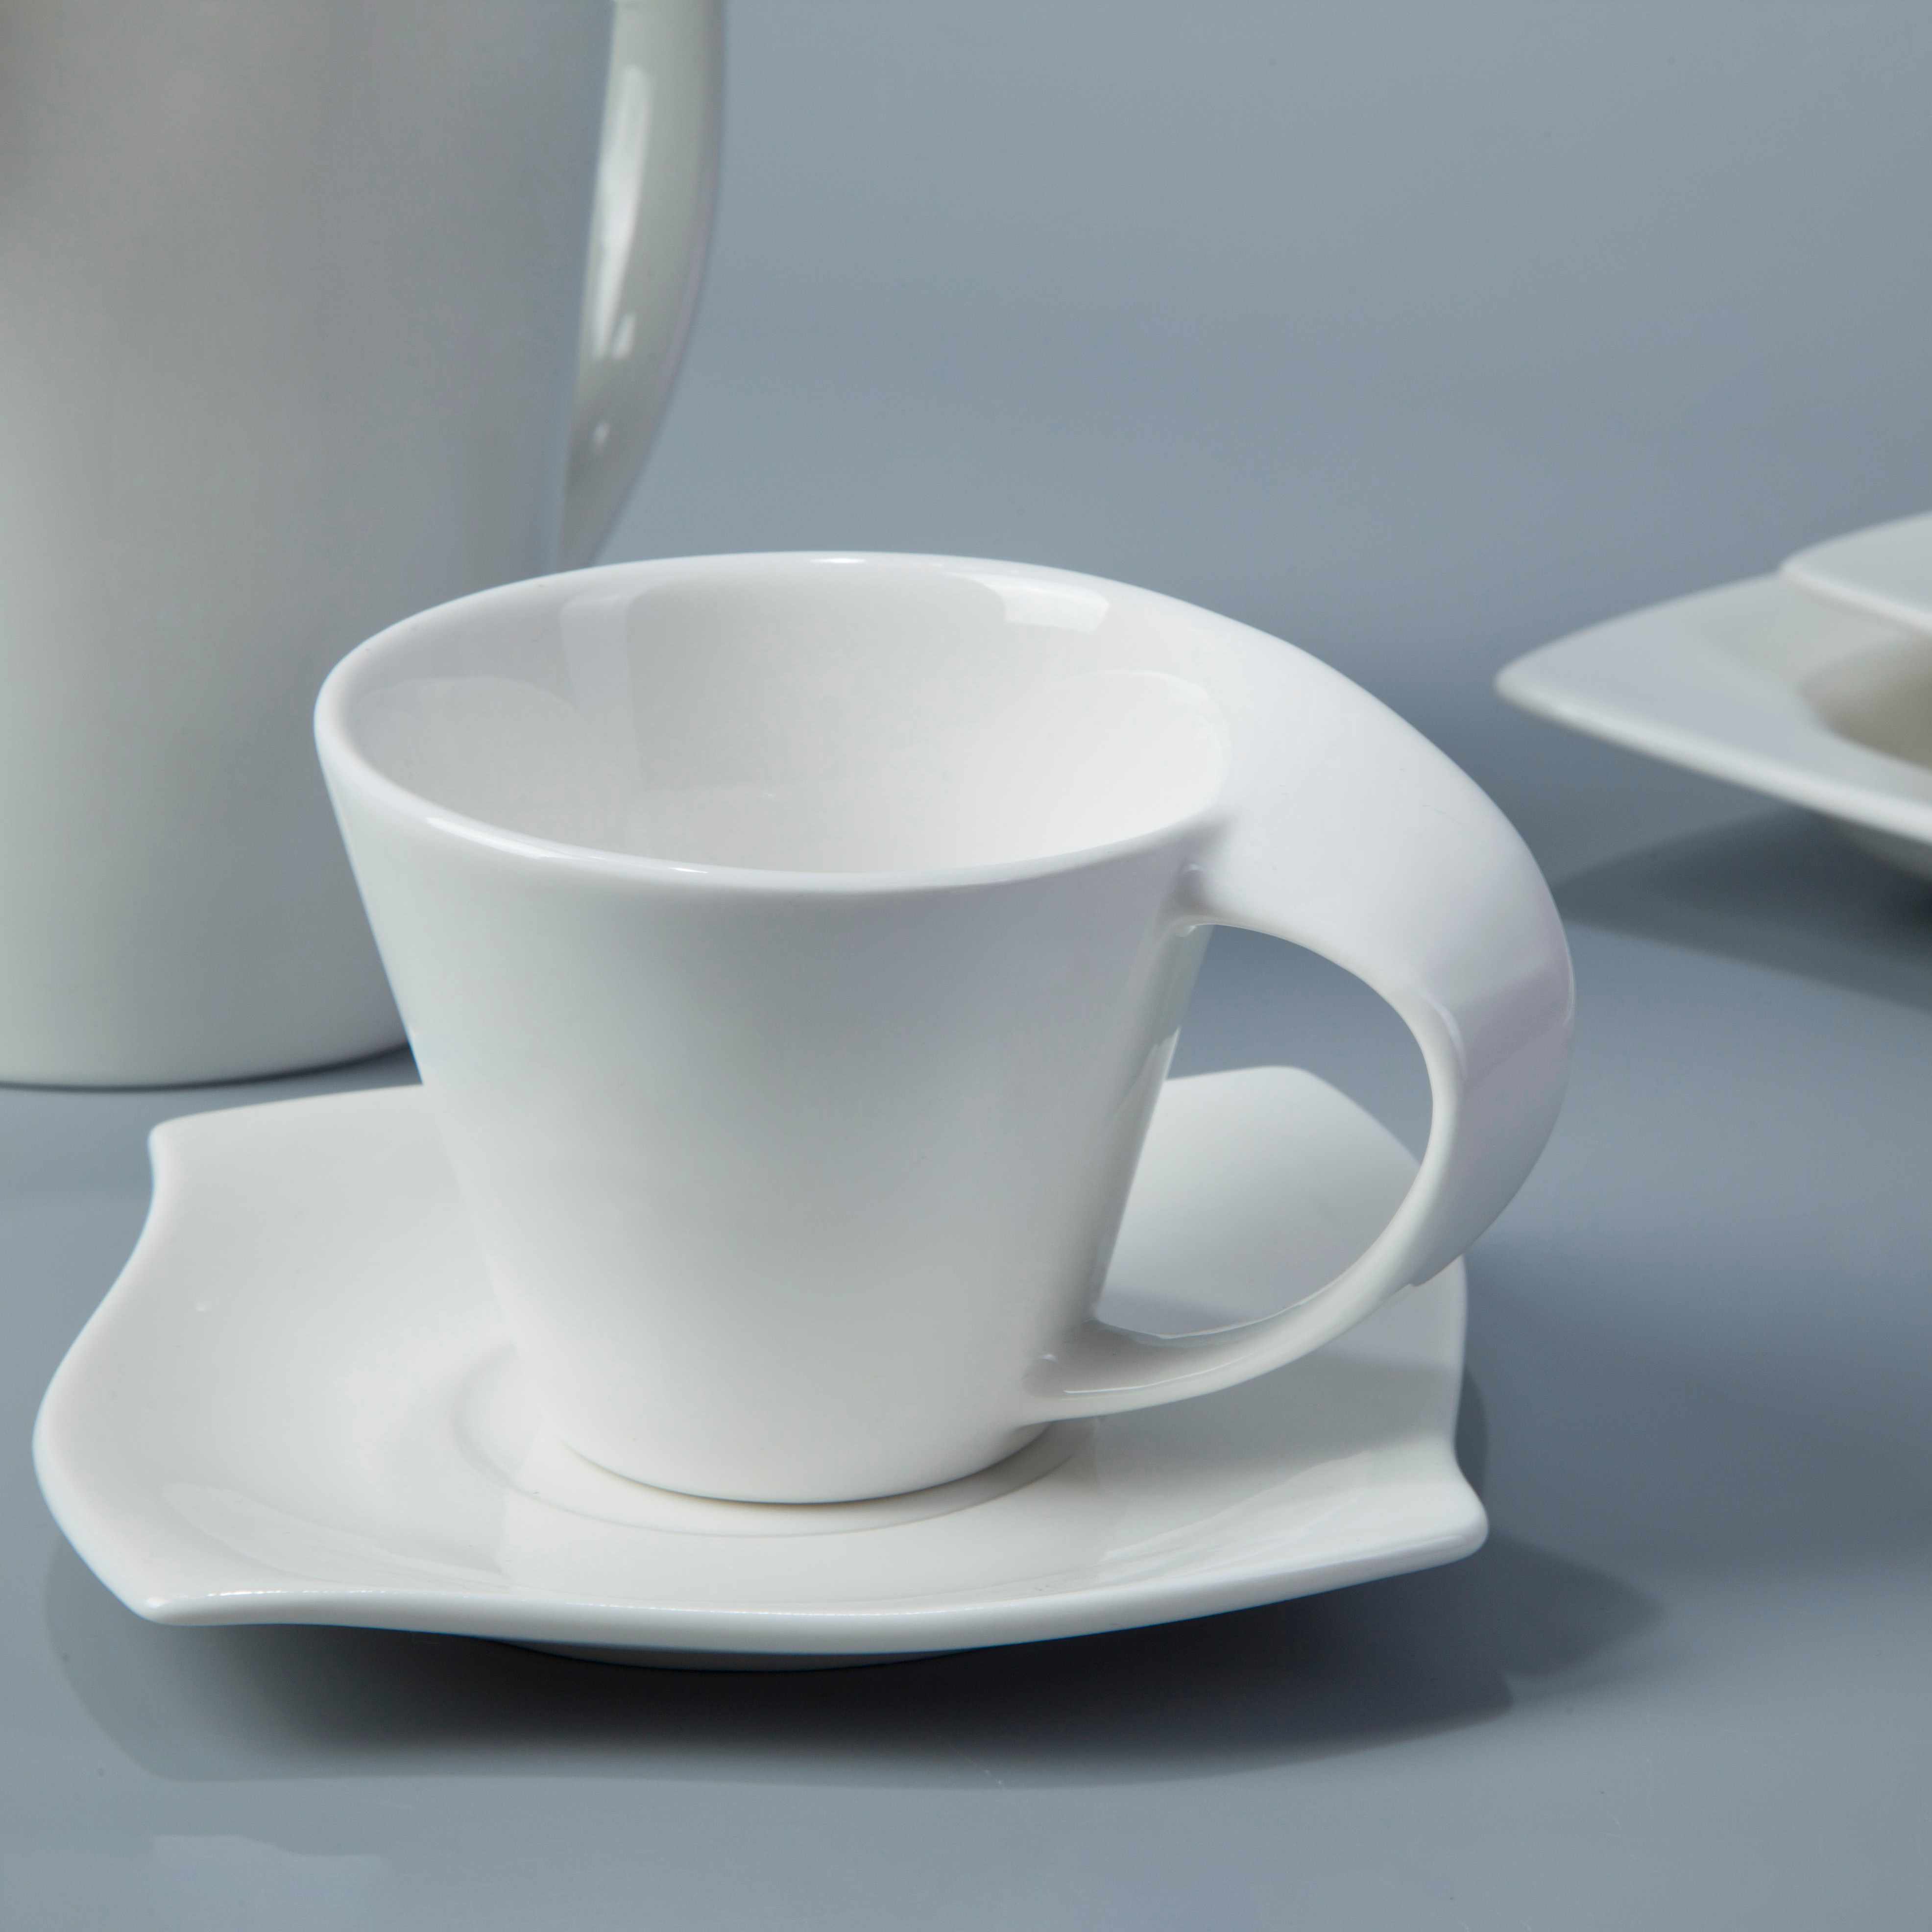 Two Eight-White Dinnerware Sets | Contemporary White Porcelain Dinnerware Restaurant